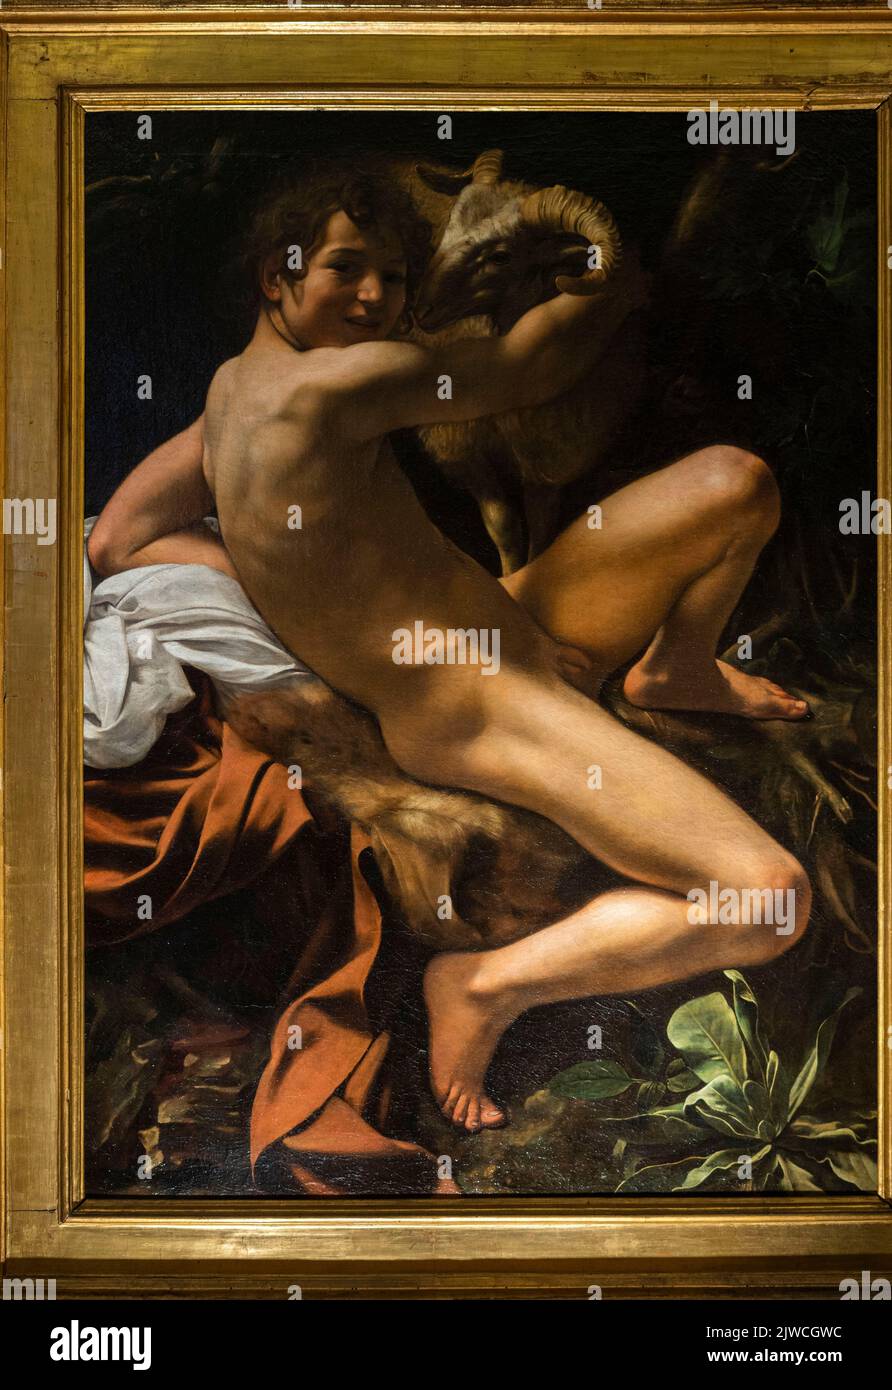 Rome, Italy - Capitoline Museums, Pinacoteca, Caravaggio painting John the Baptist Stock Photo